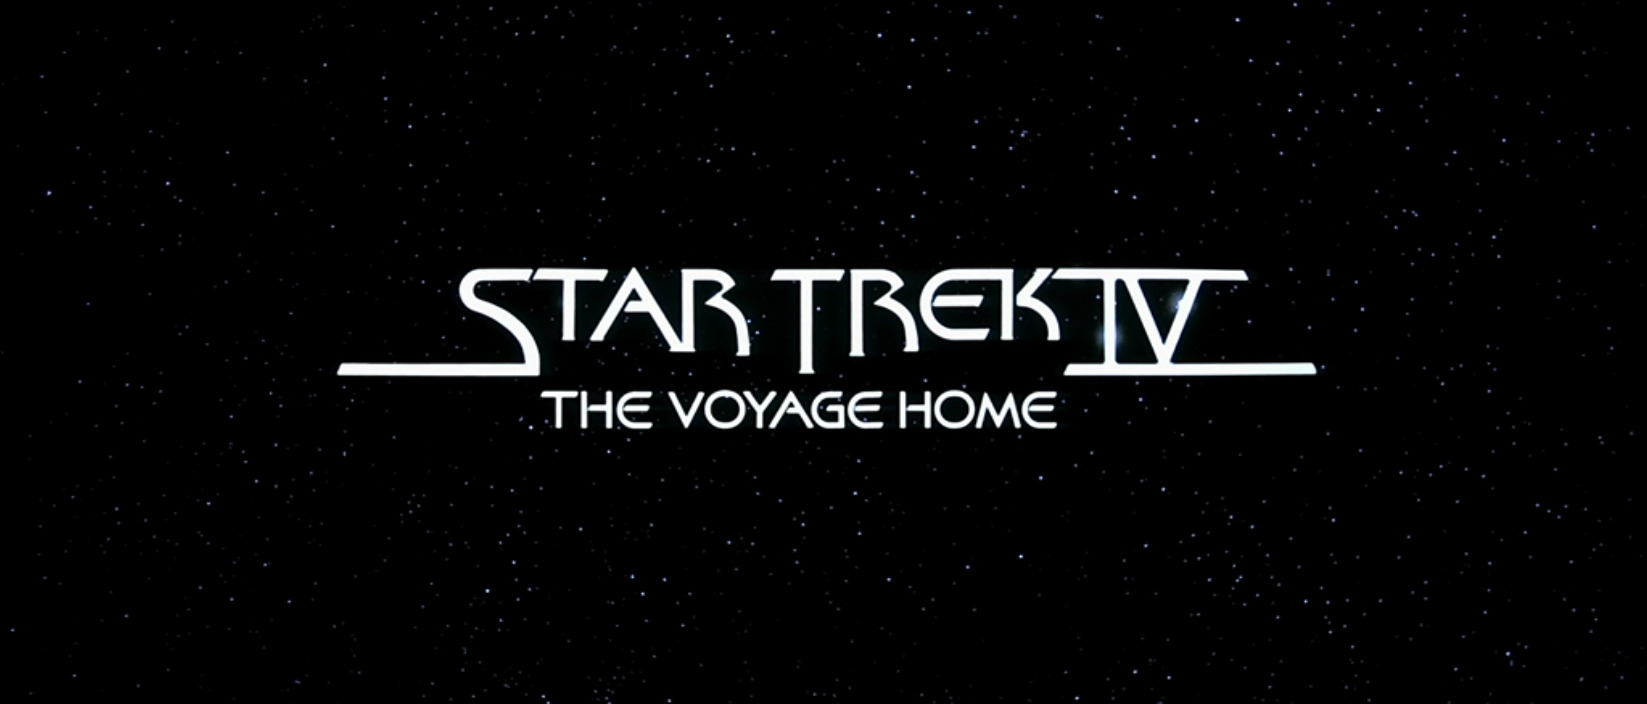 Star Trek IV Title Card